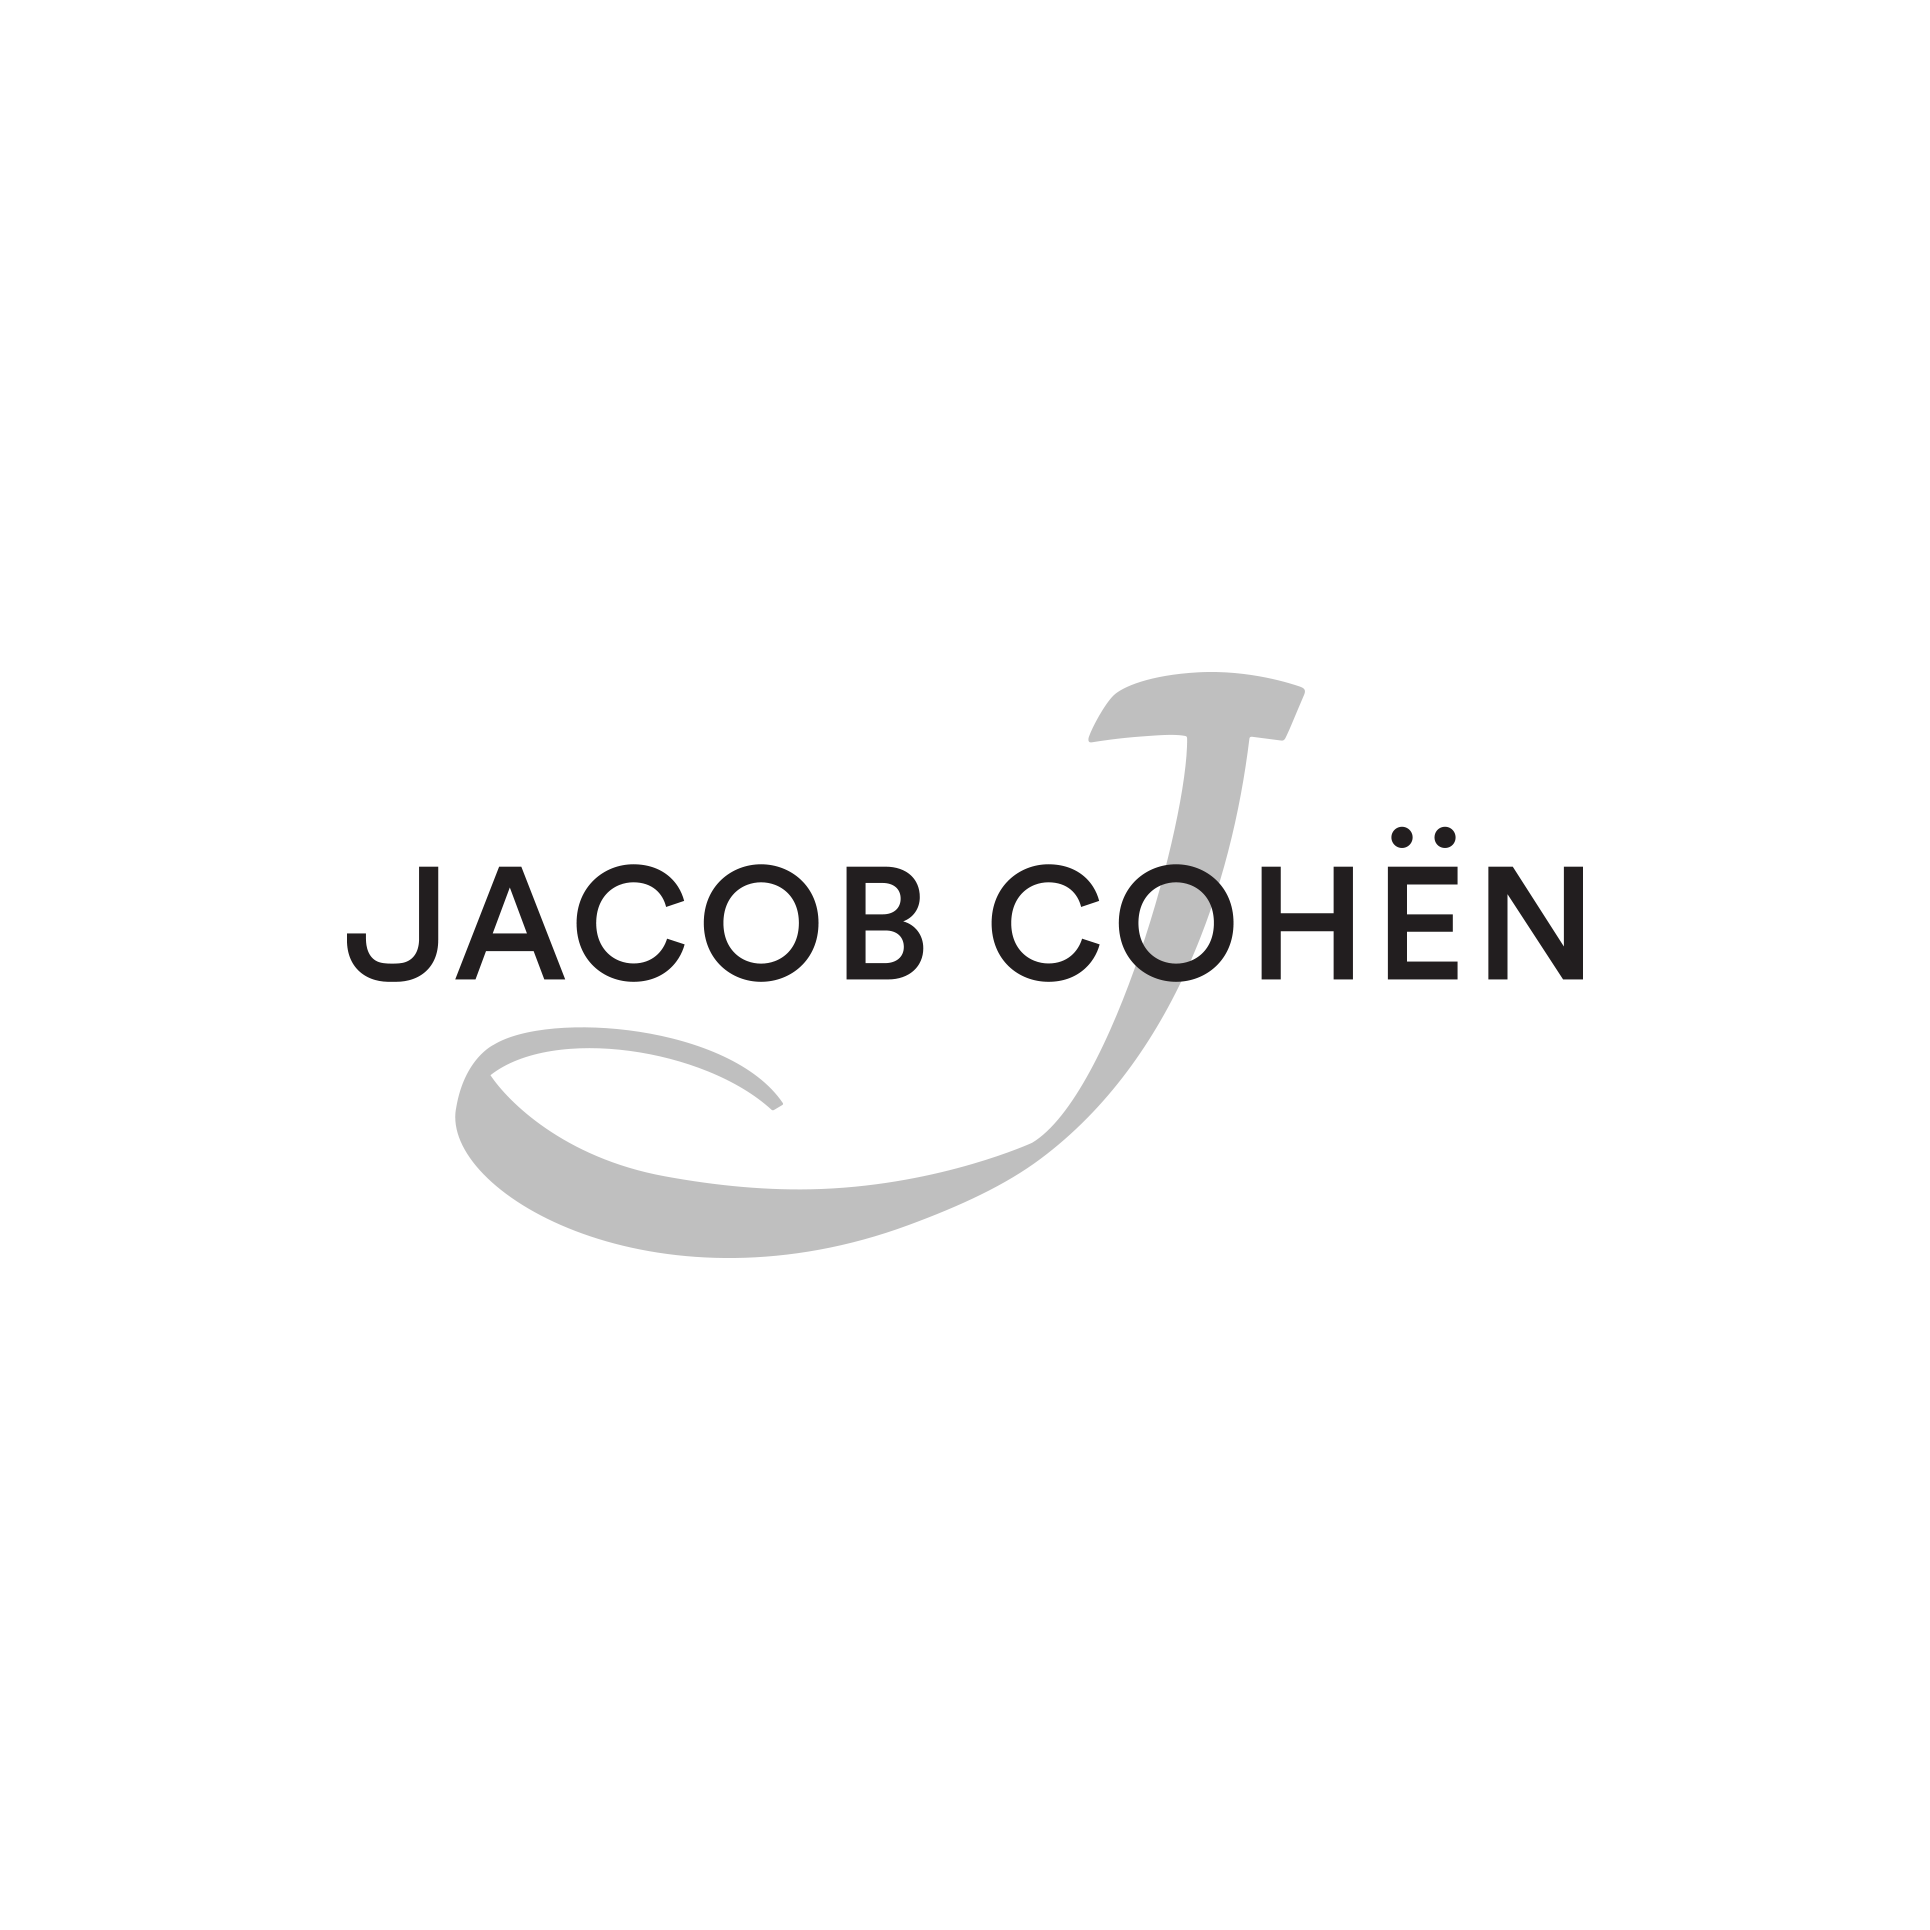 _0010_JACOB-COHEN.png